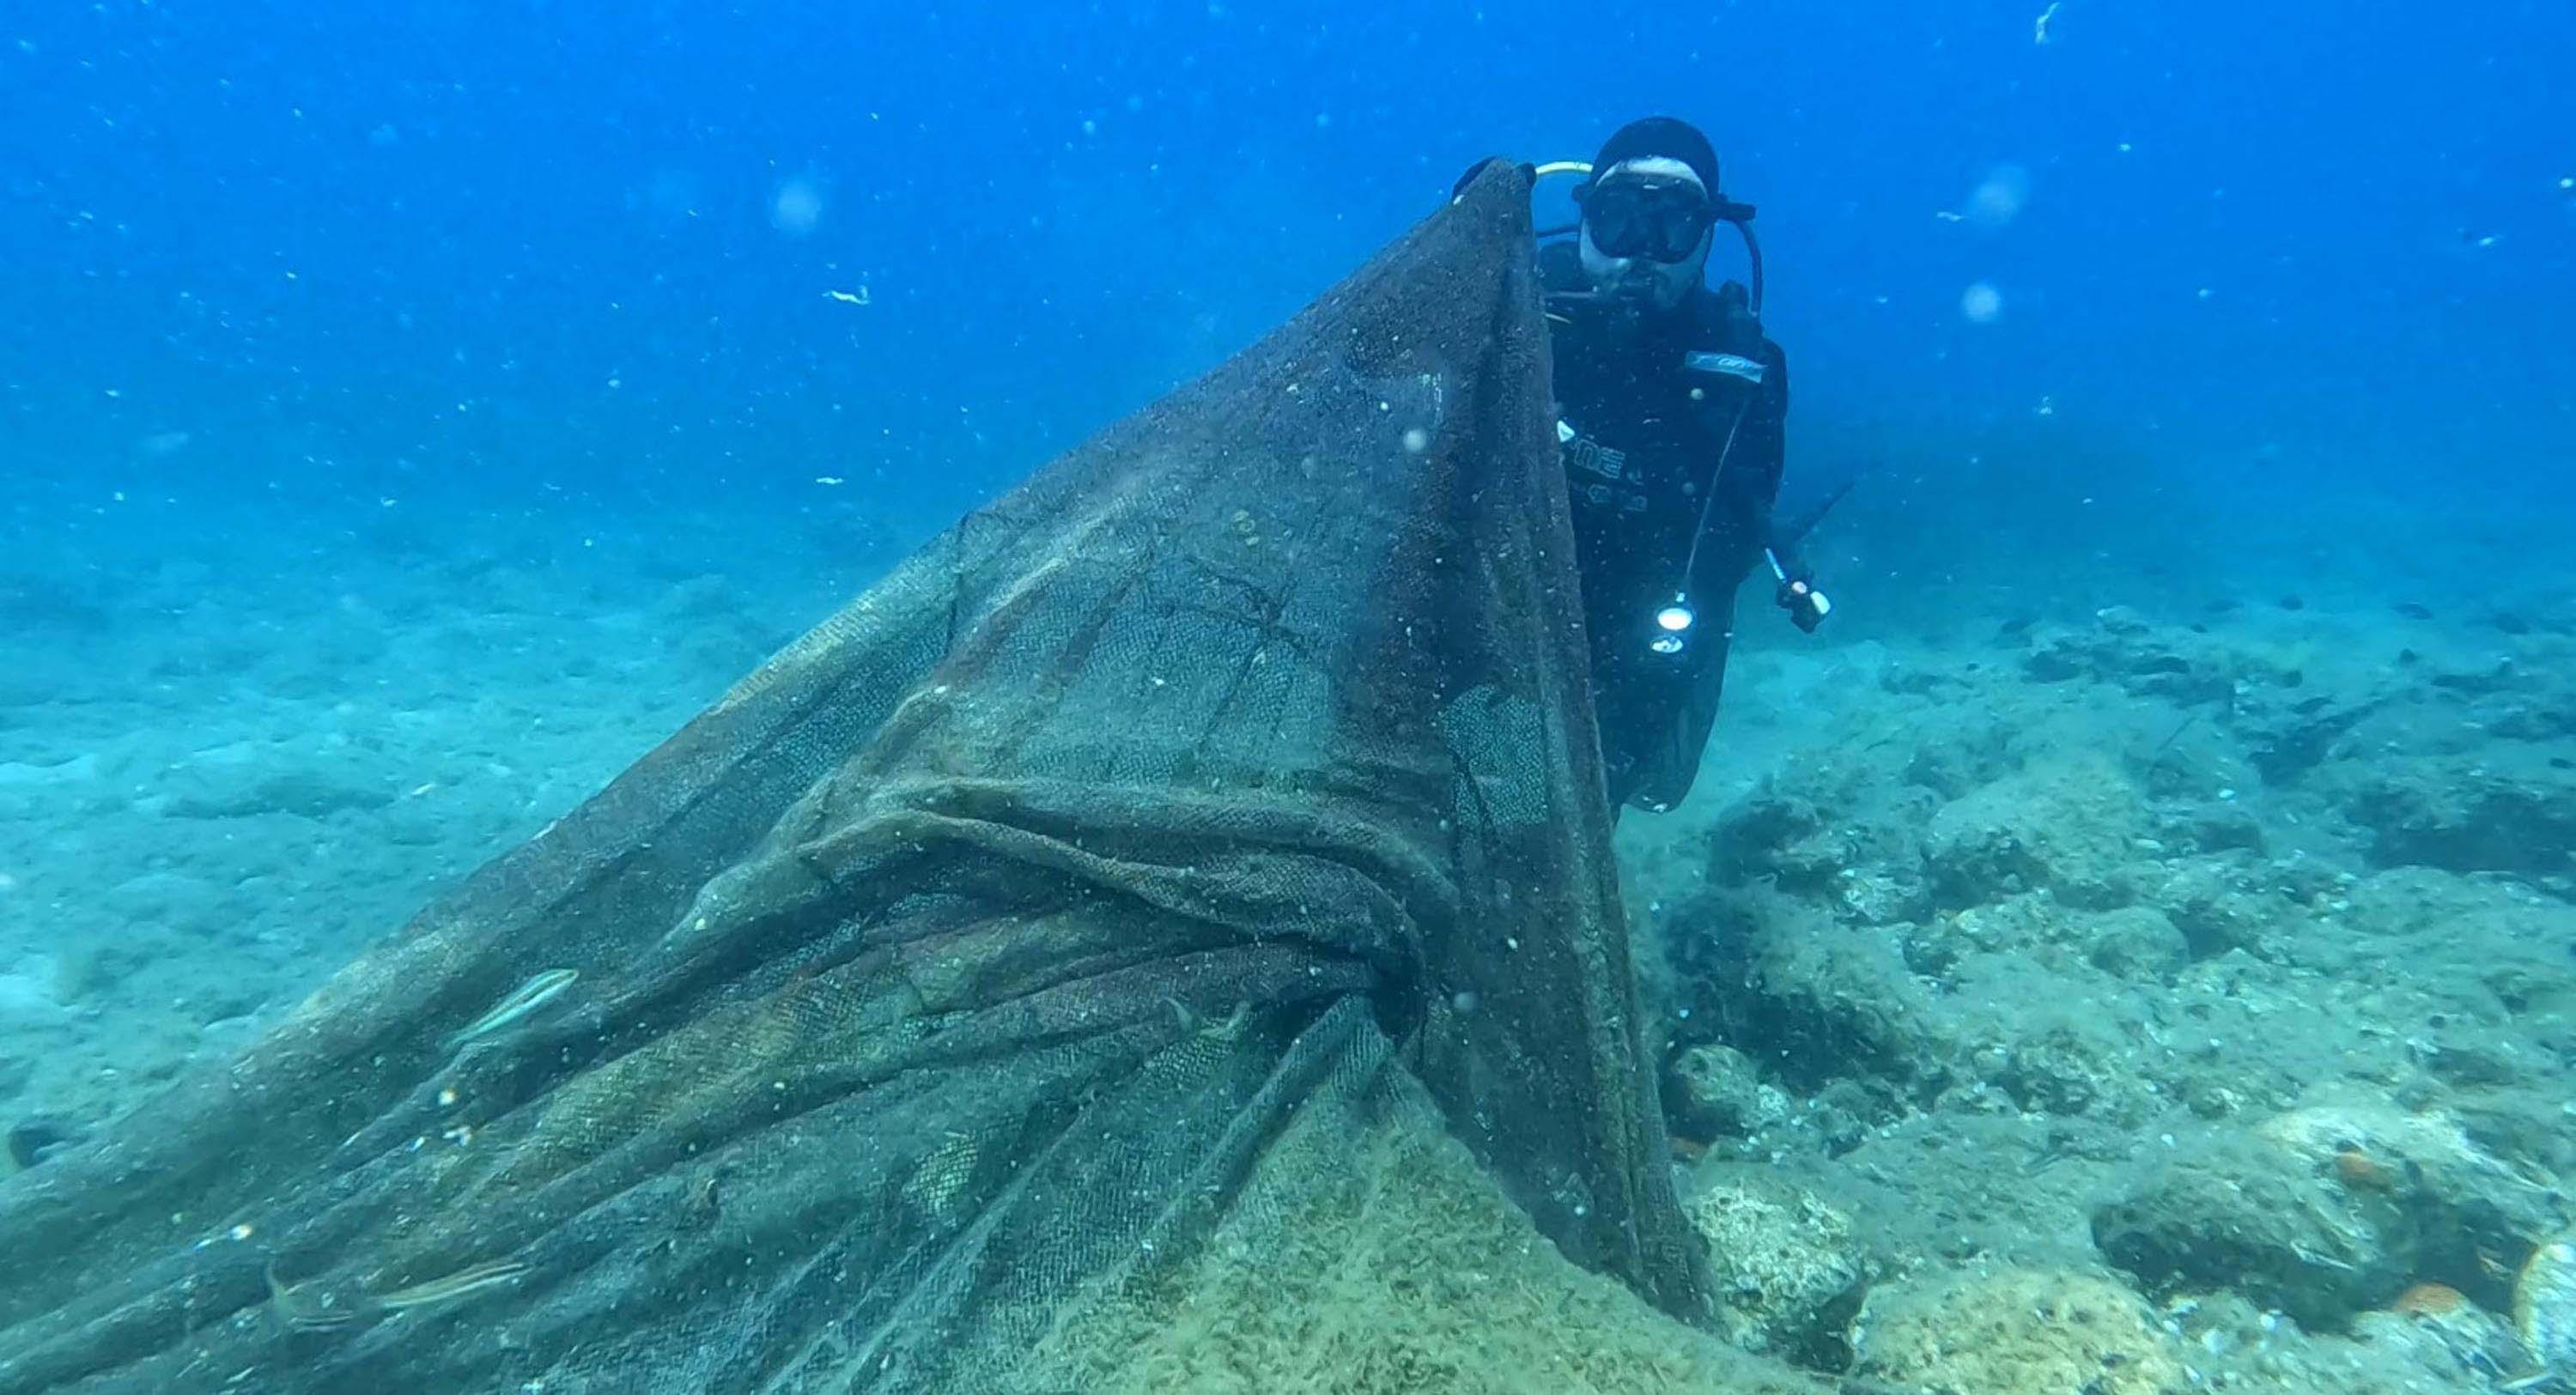 8-year ghost net effort protects marine biodiversity - Türkiye News